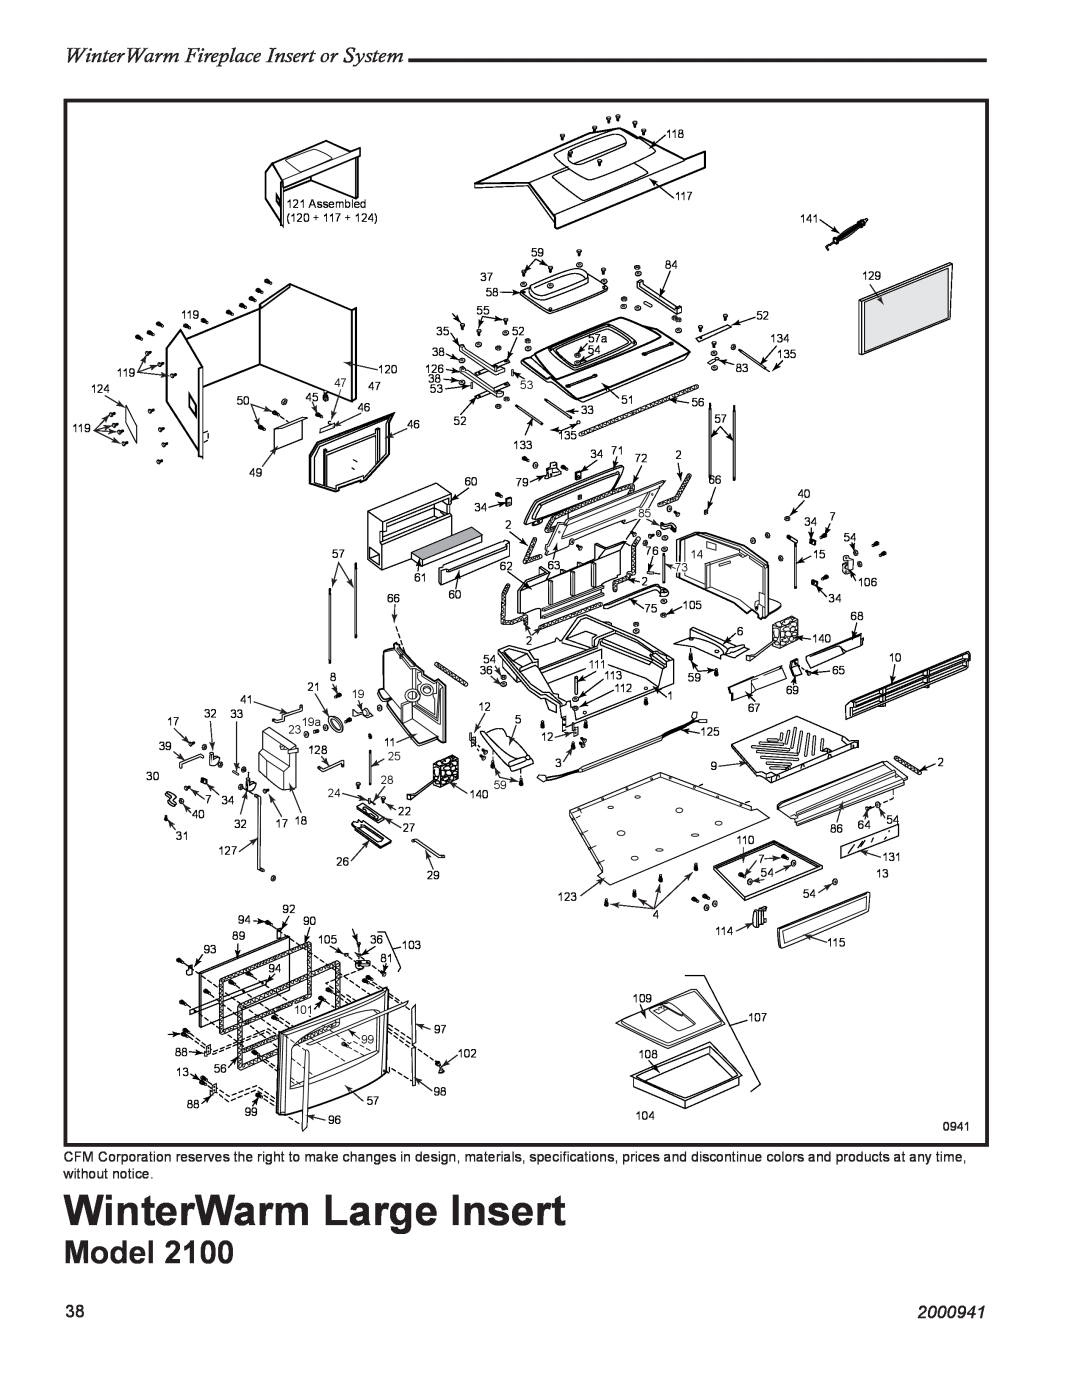 Vermont Casting 2100 WinterWarm Large Insert, Model, WinterWarm Fireplace Insert or System, 2000941 